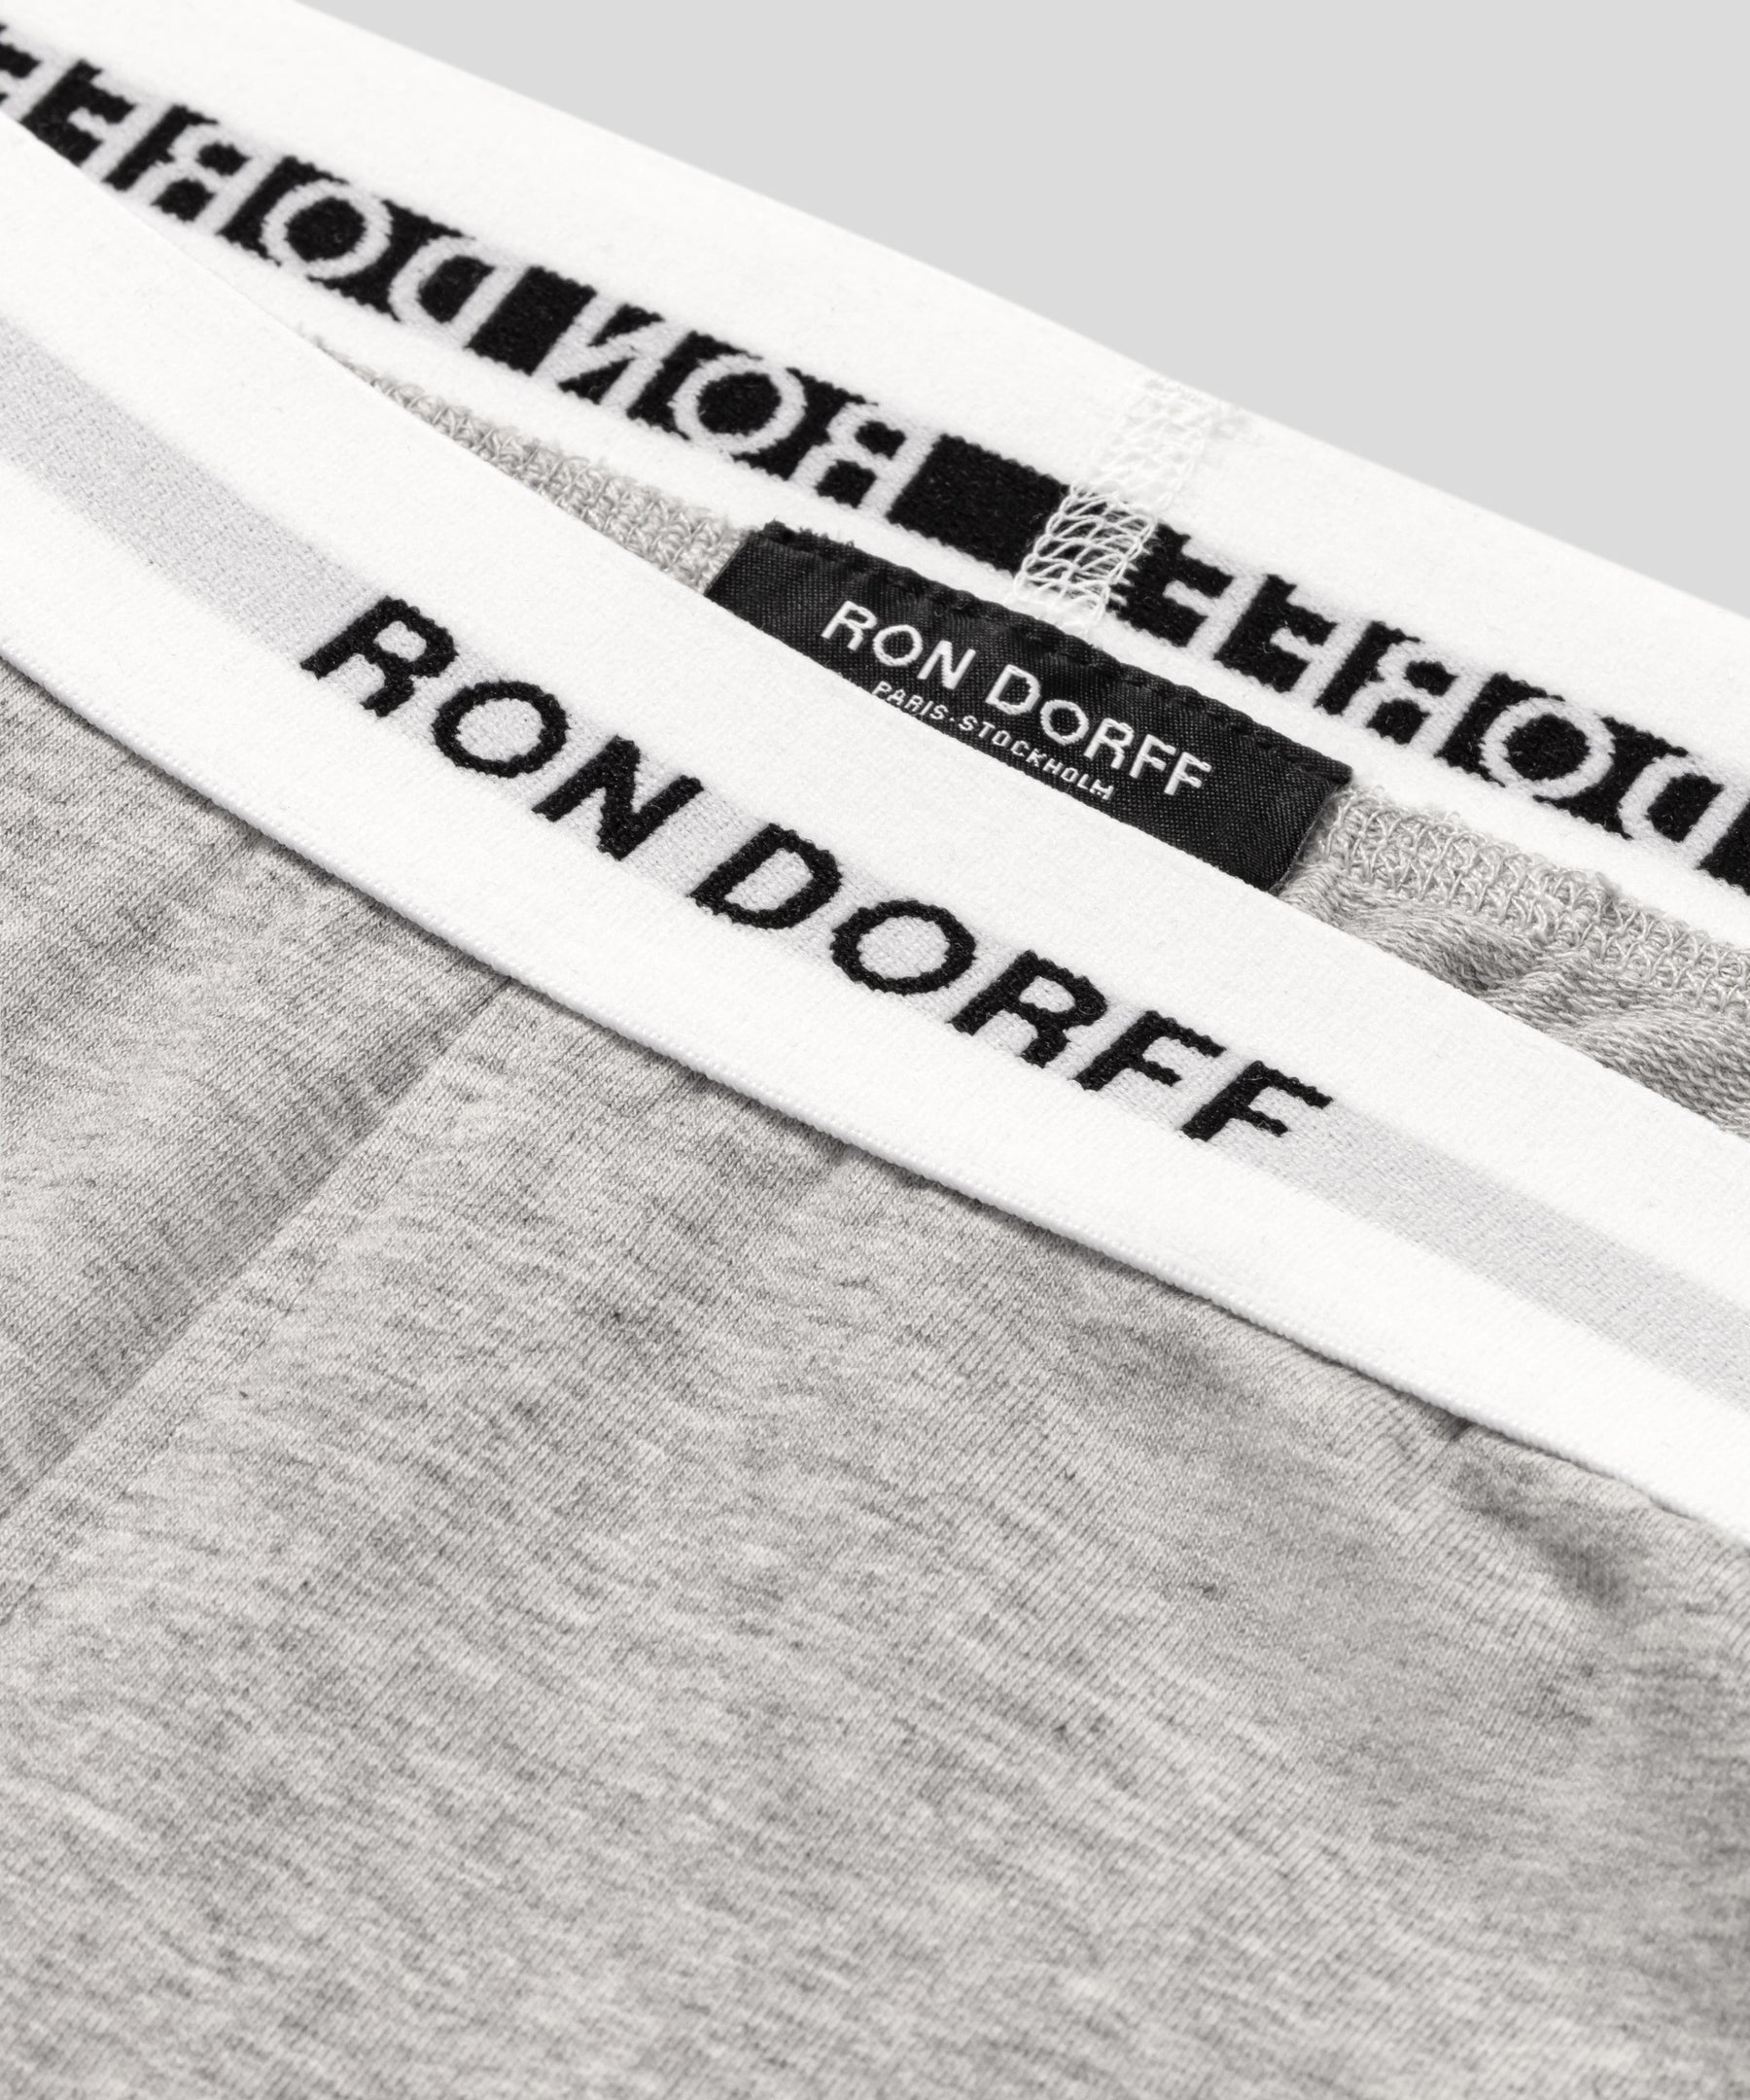 RON DORFF Lounge Shorts: Heather Grey